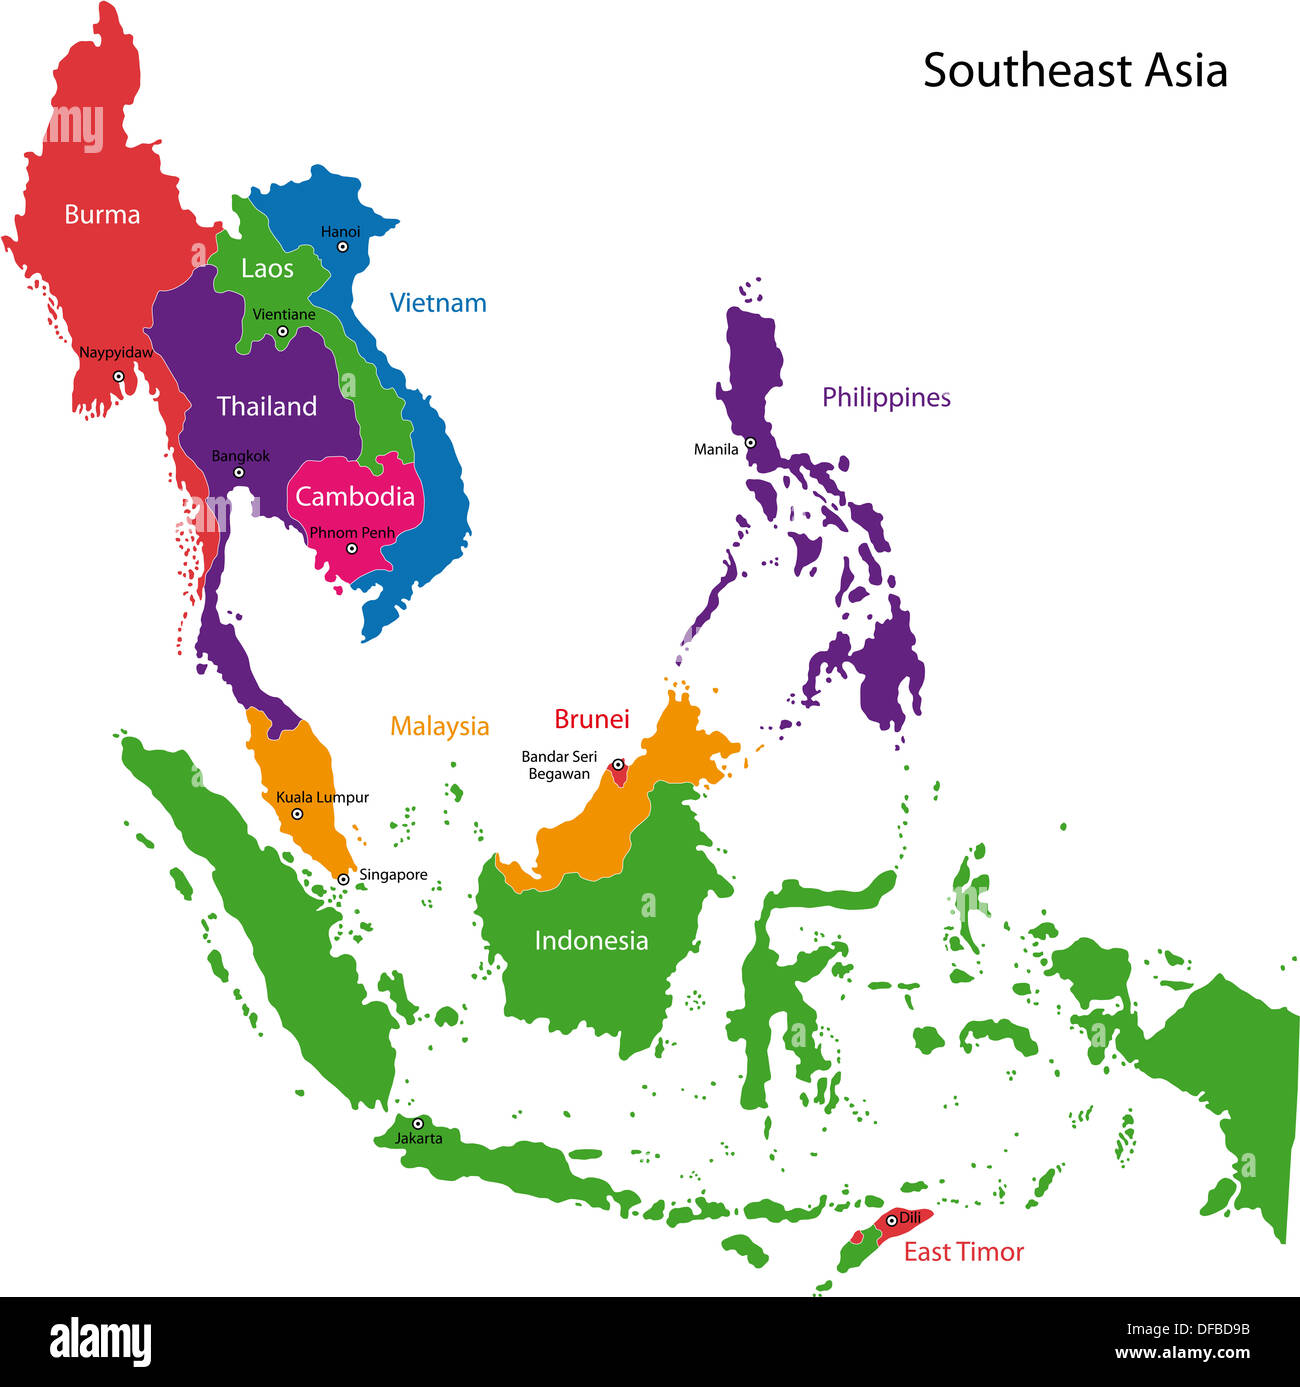 Southeastern Asia map Stock Photo